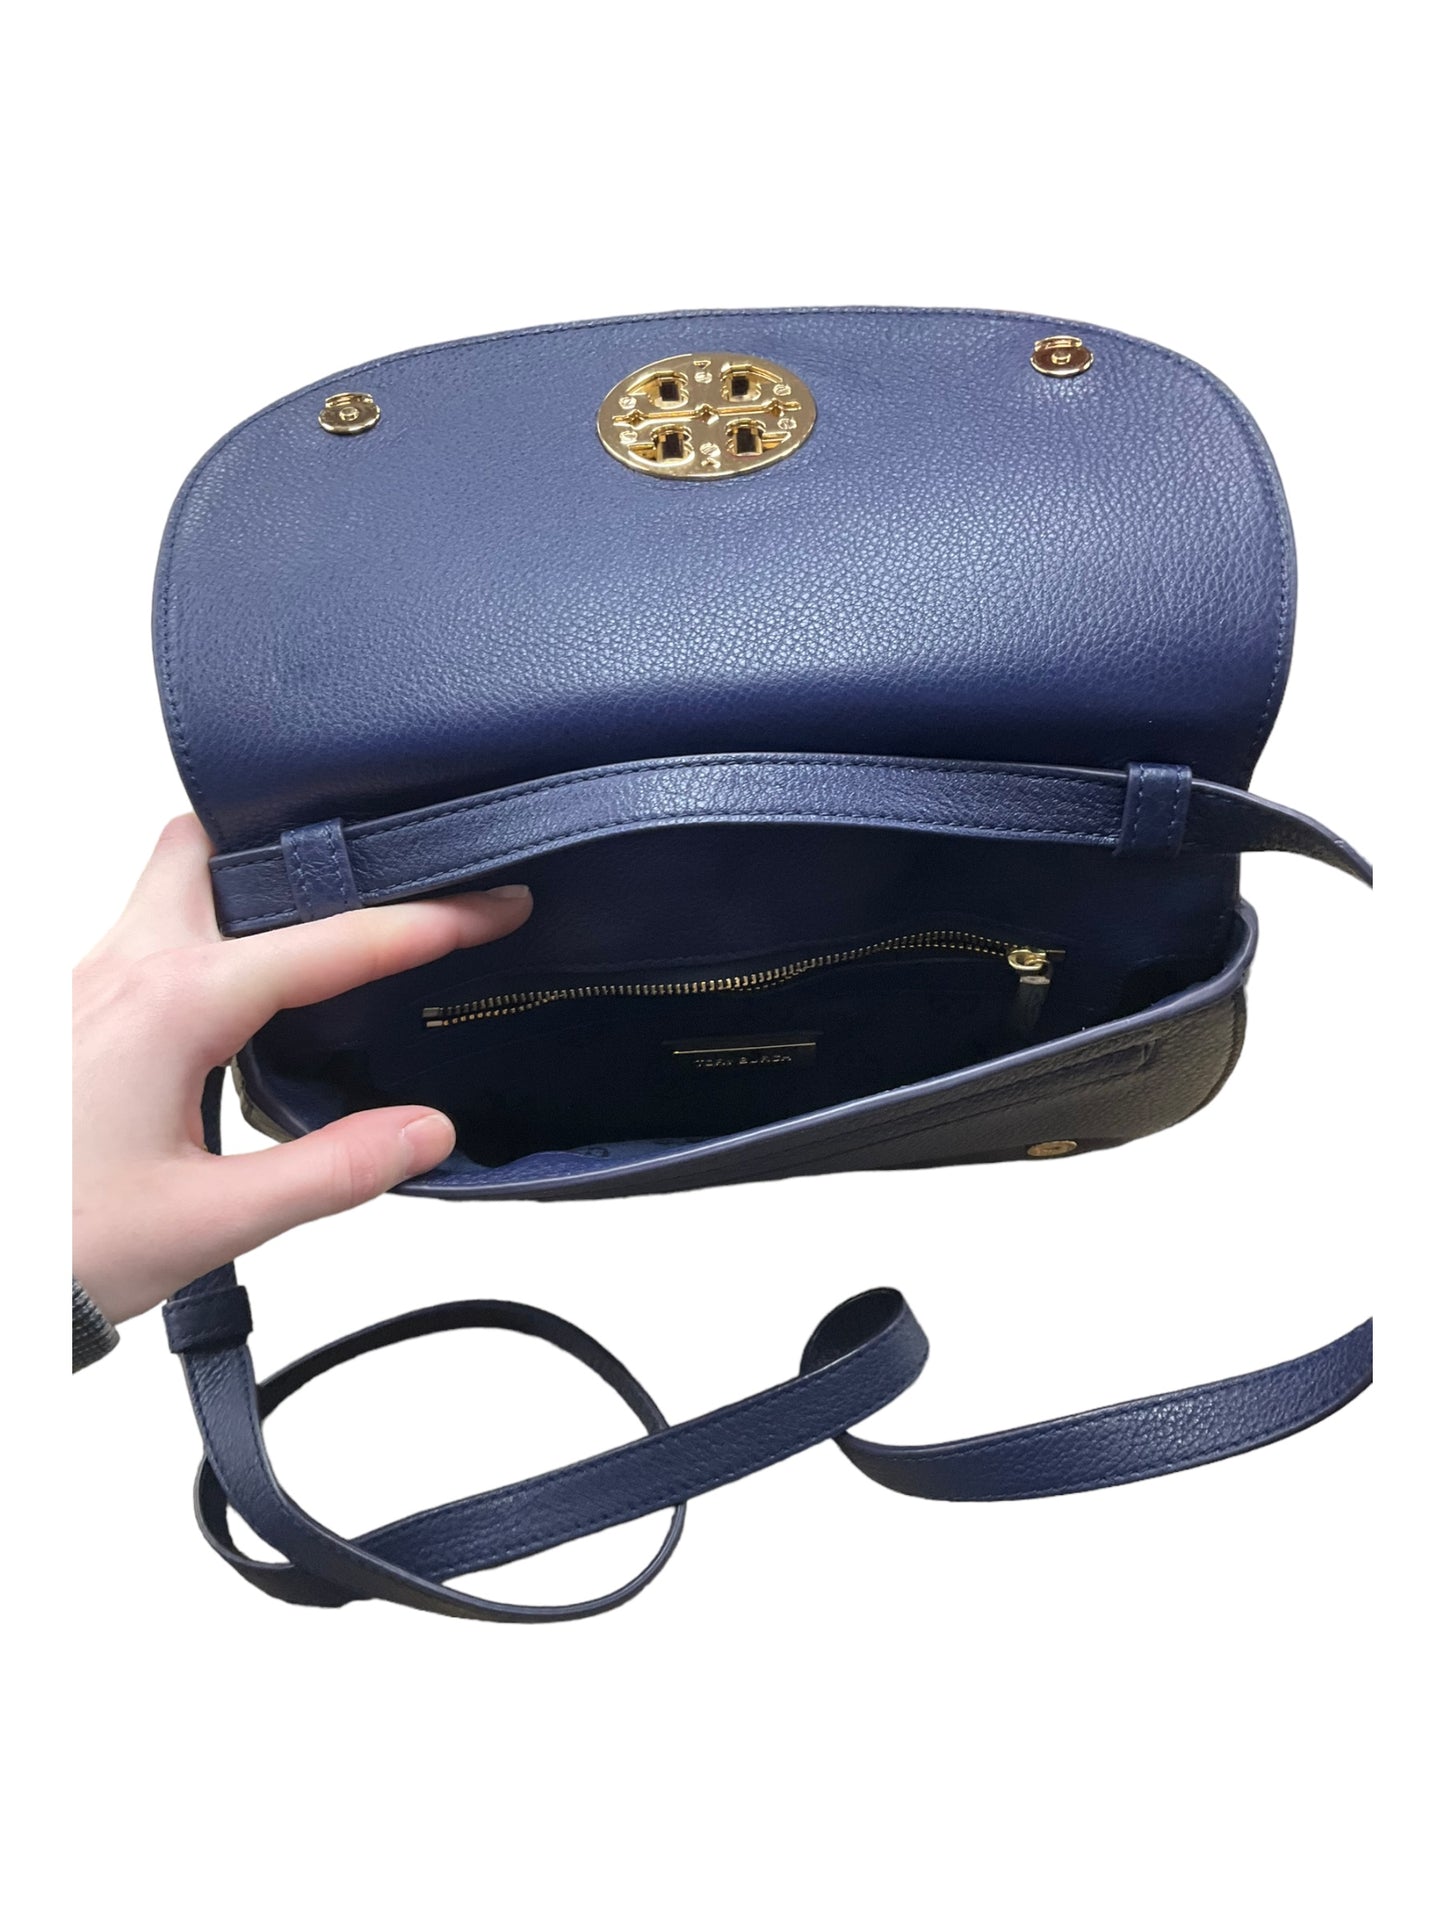 Handbag Designer By Tory Burch  Size: Small